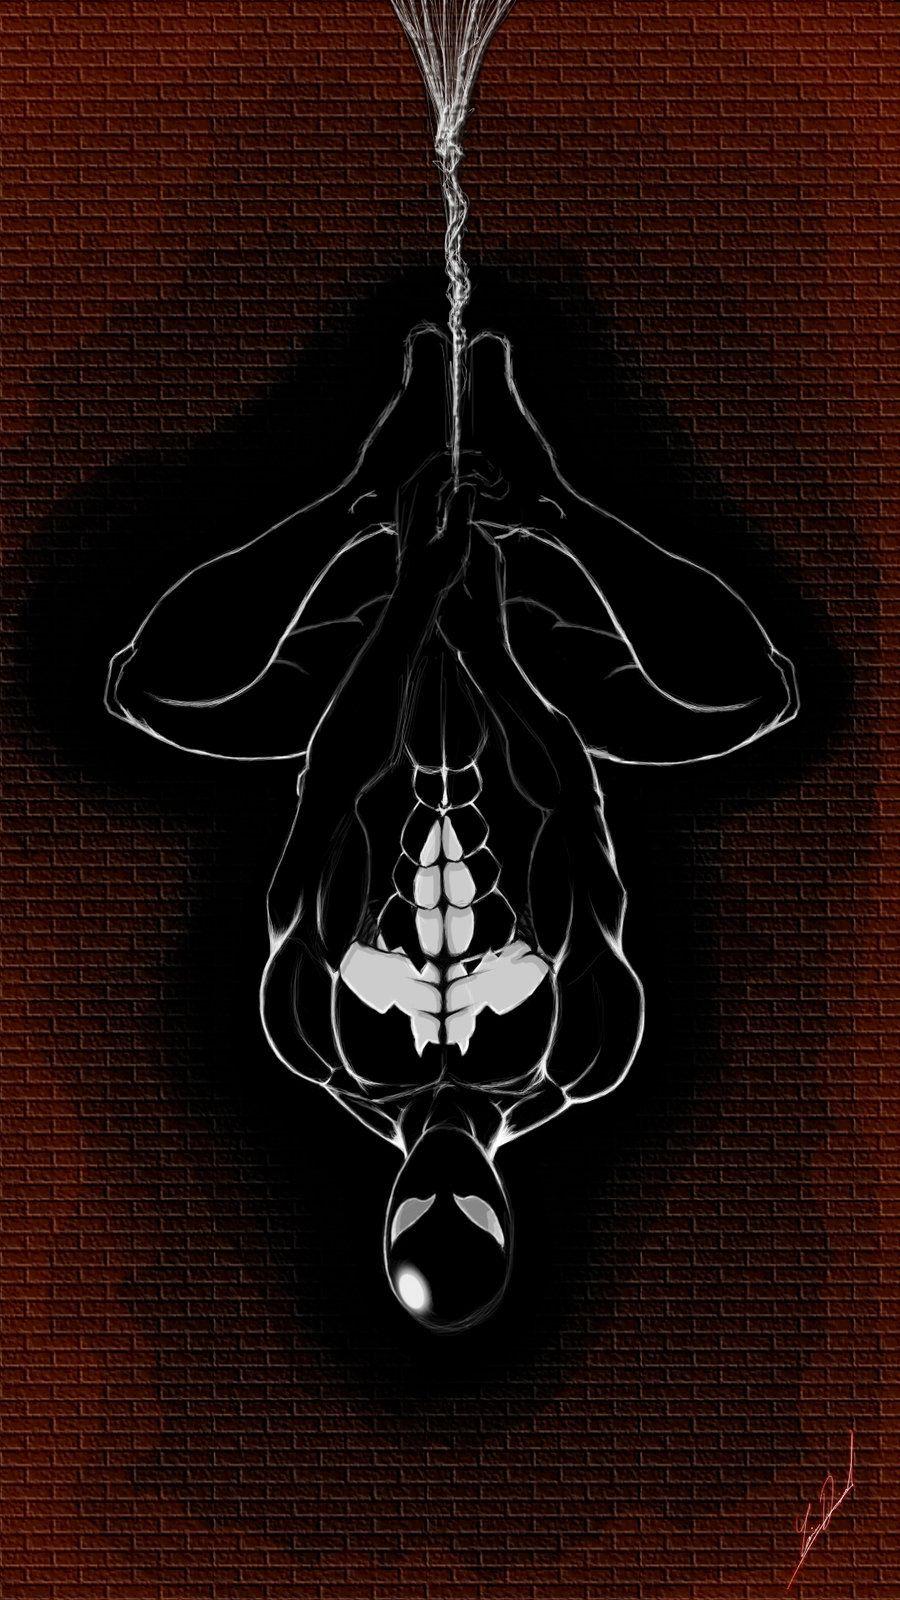 Black Spiderman Wallpaper For iPhone 6